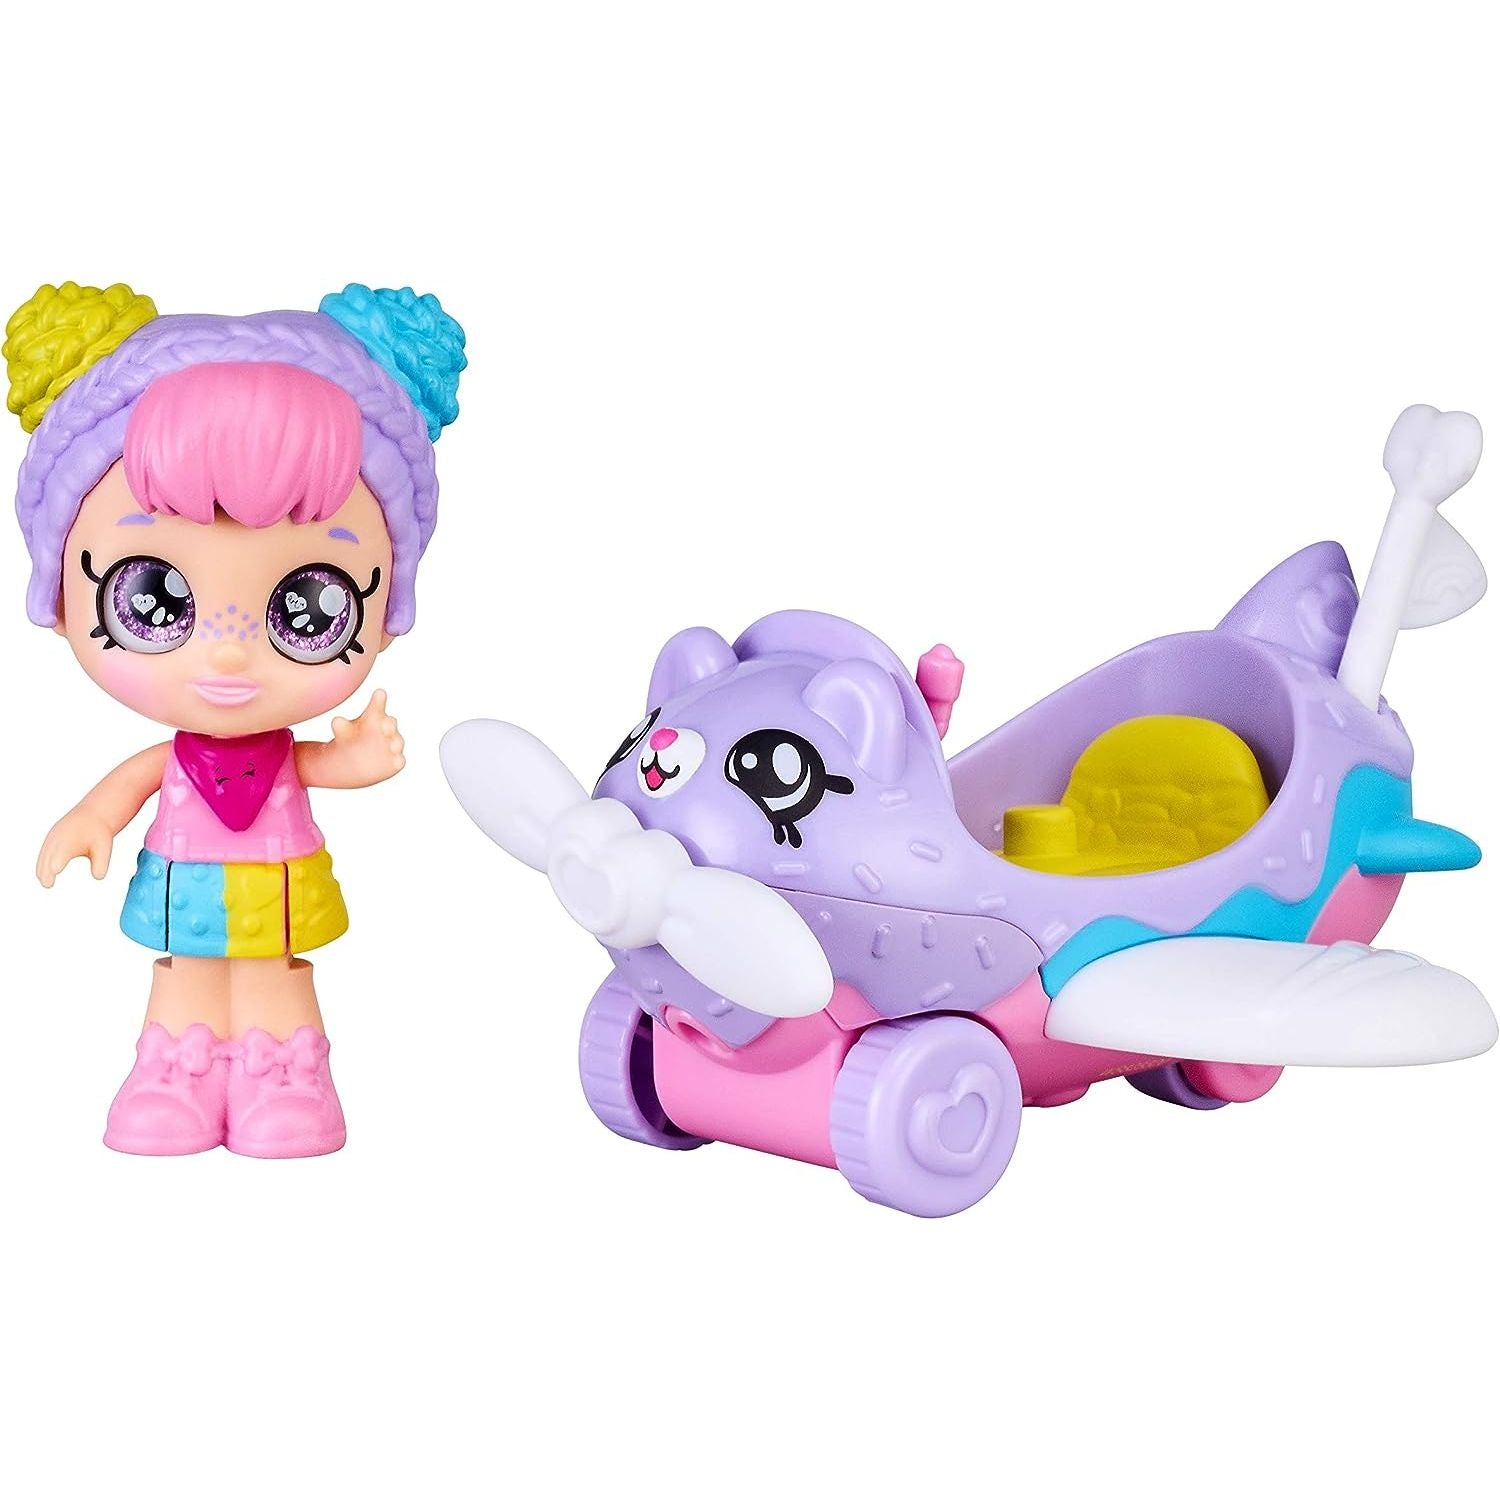 Kindi Kids Minis - Rainbow Kate's Airplane - Collectible Vehicle and Posable Bobble Head Figurine 2pc